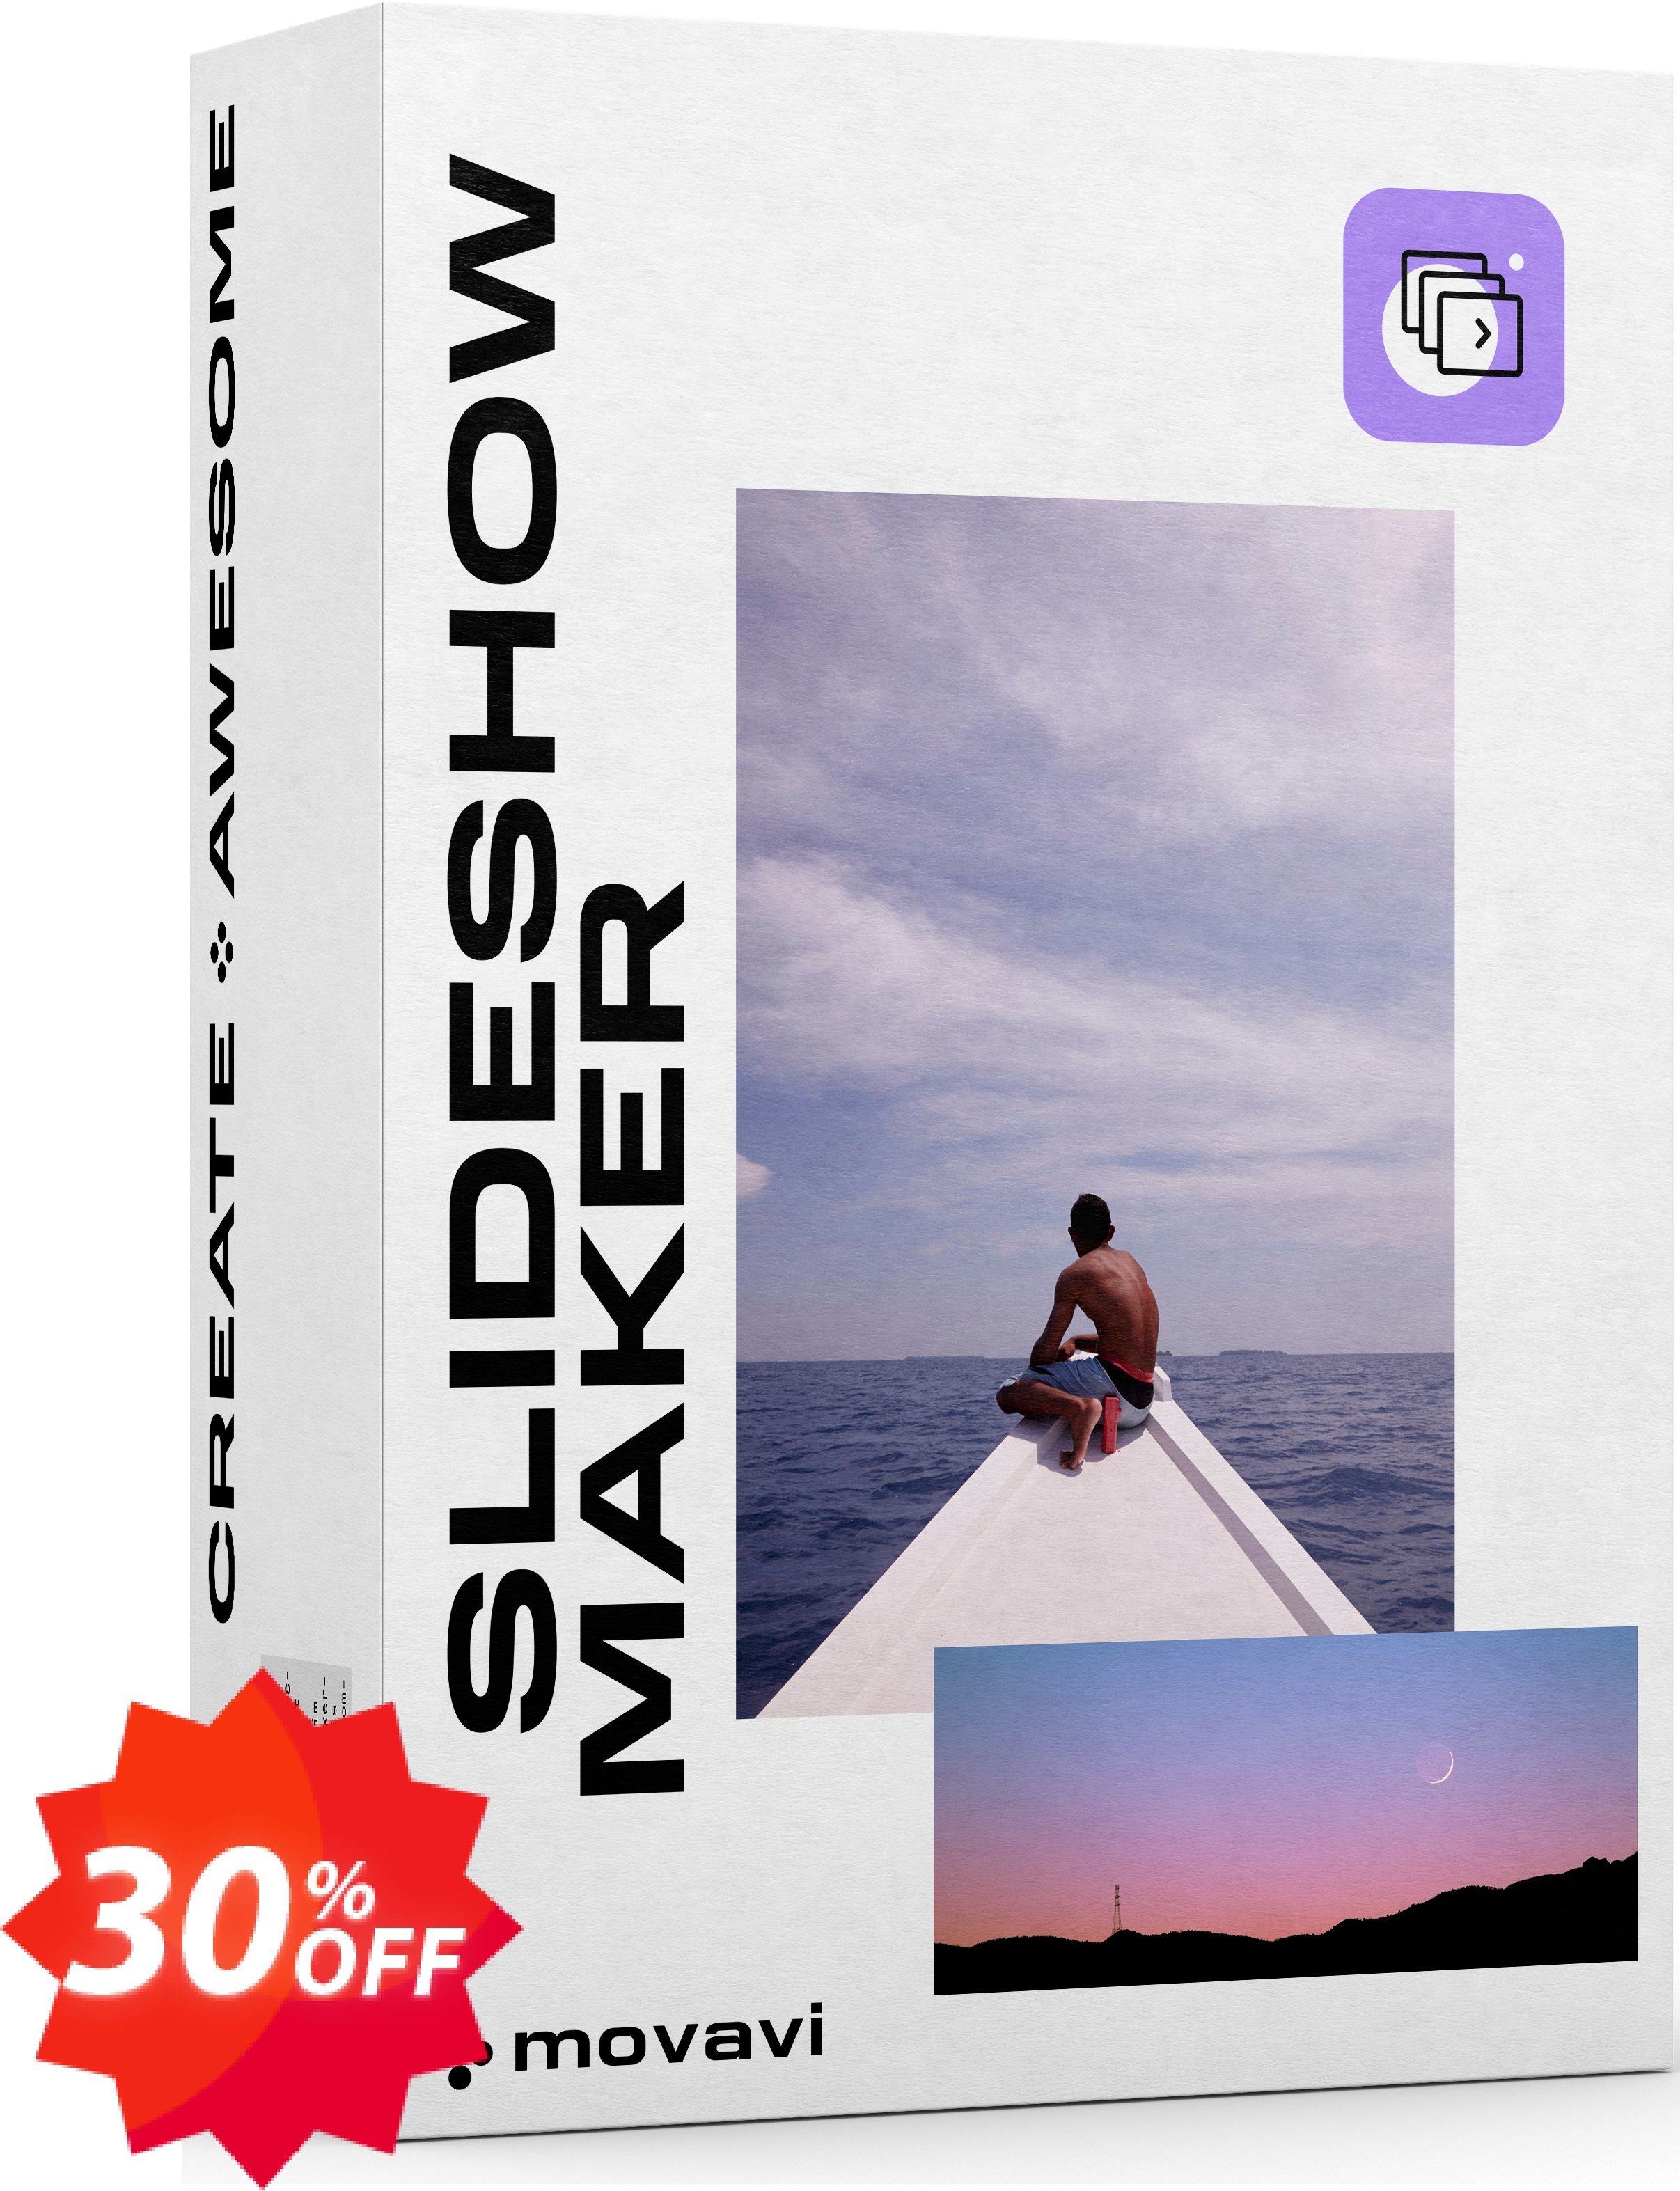 Movavi Bundle: Slideshow Maker + Valentine Pack Coupon code 30% discount 